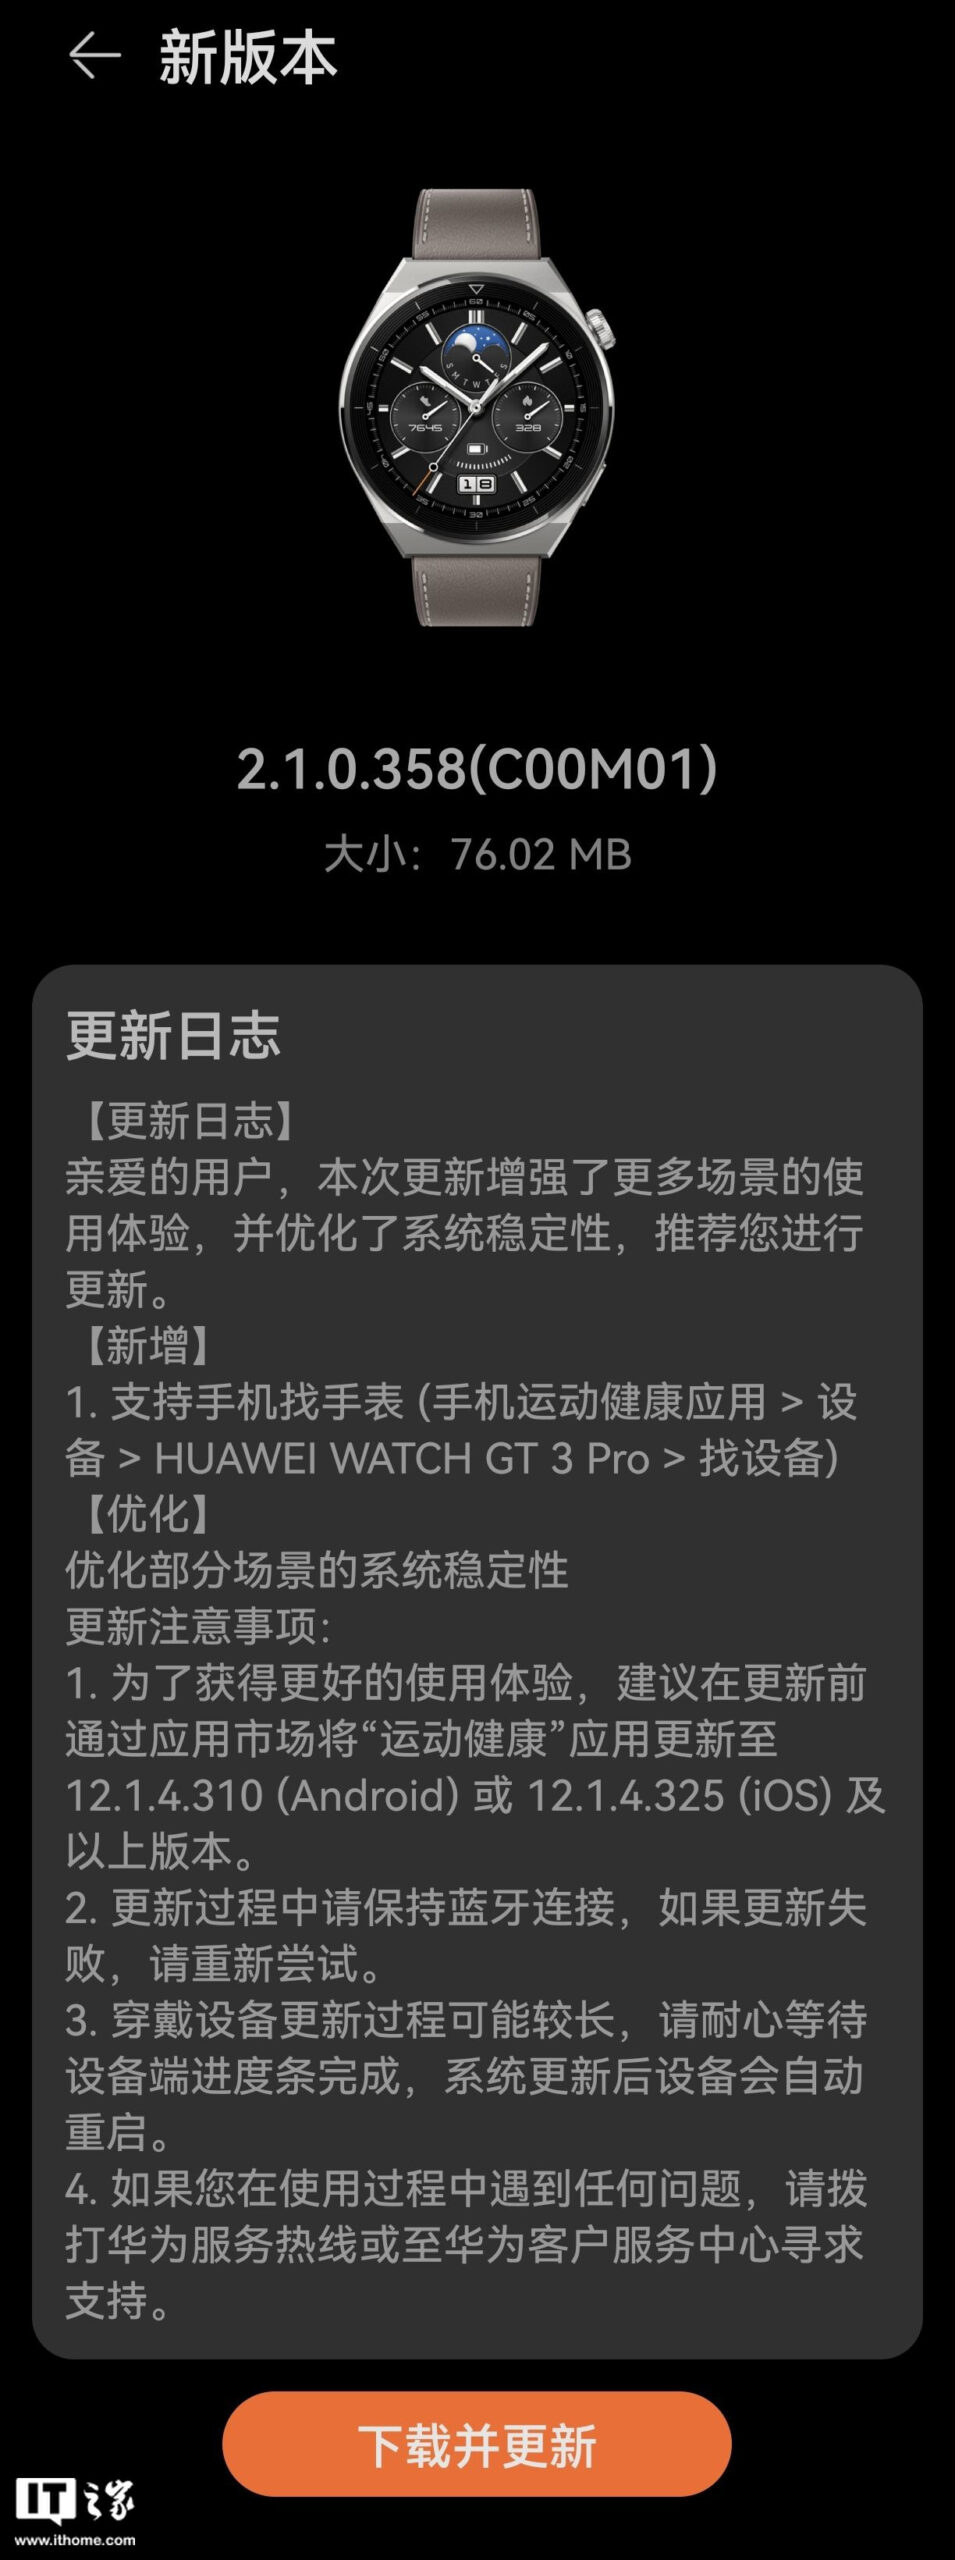 Huawei Watch GT 3 Pro getting HarmonyOS 2.1.0.358